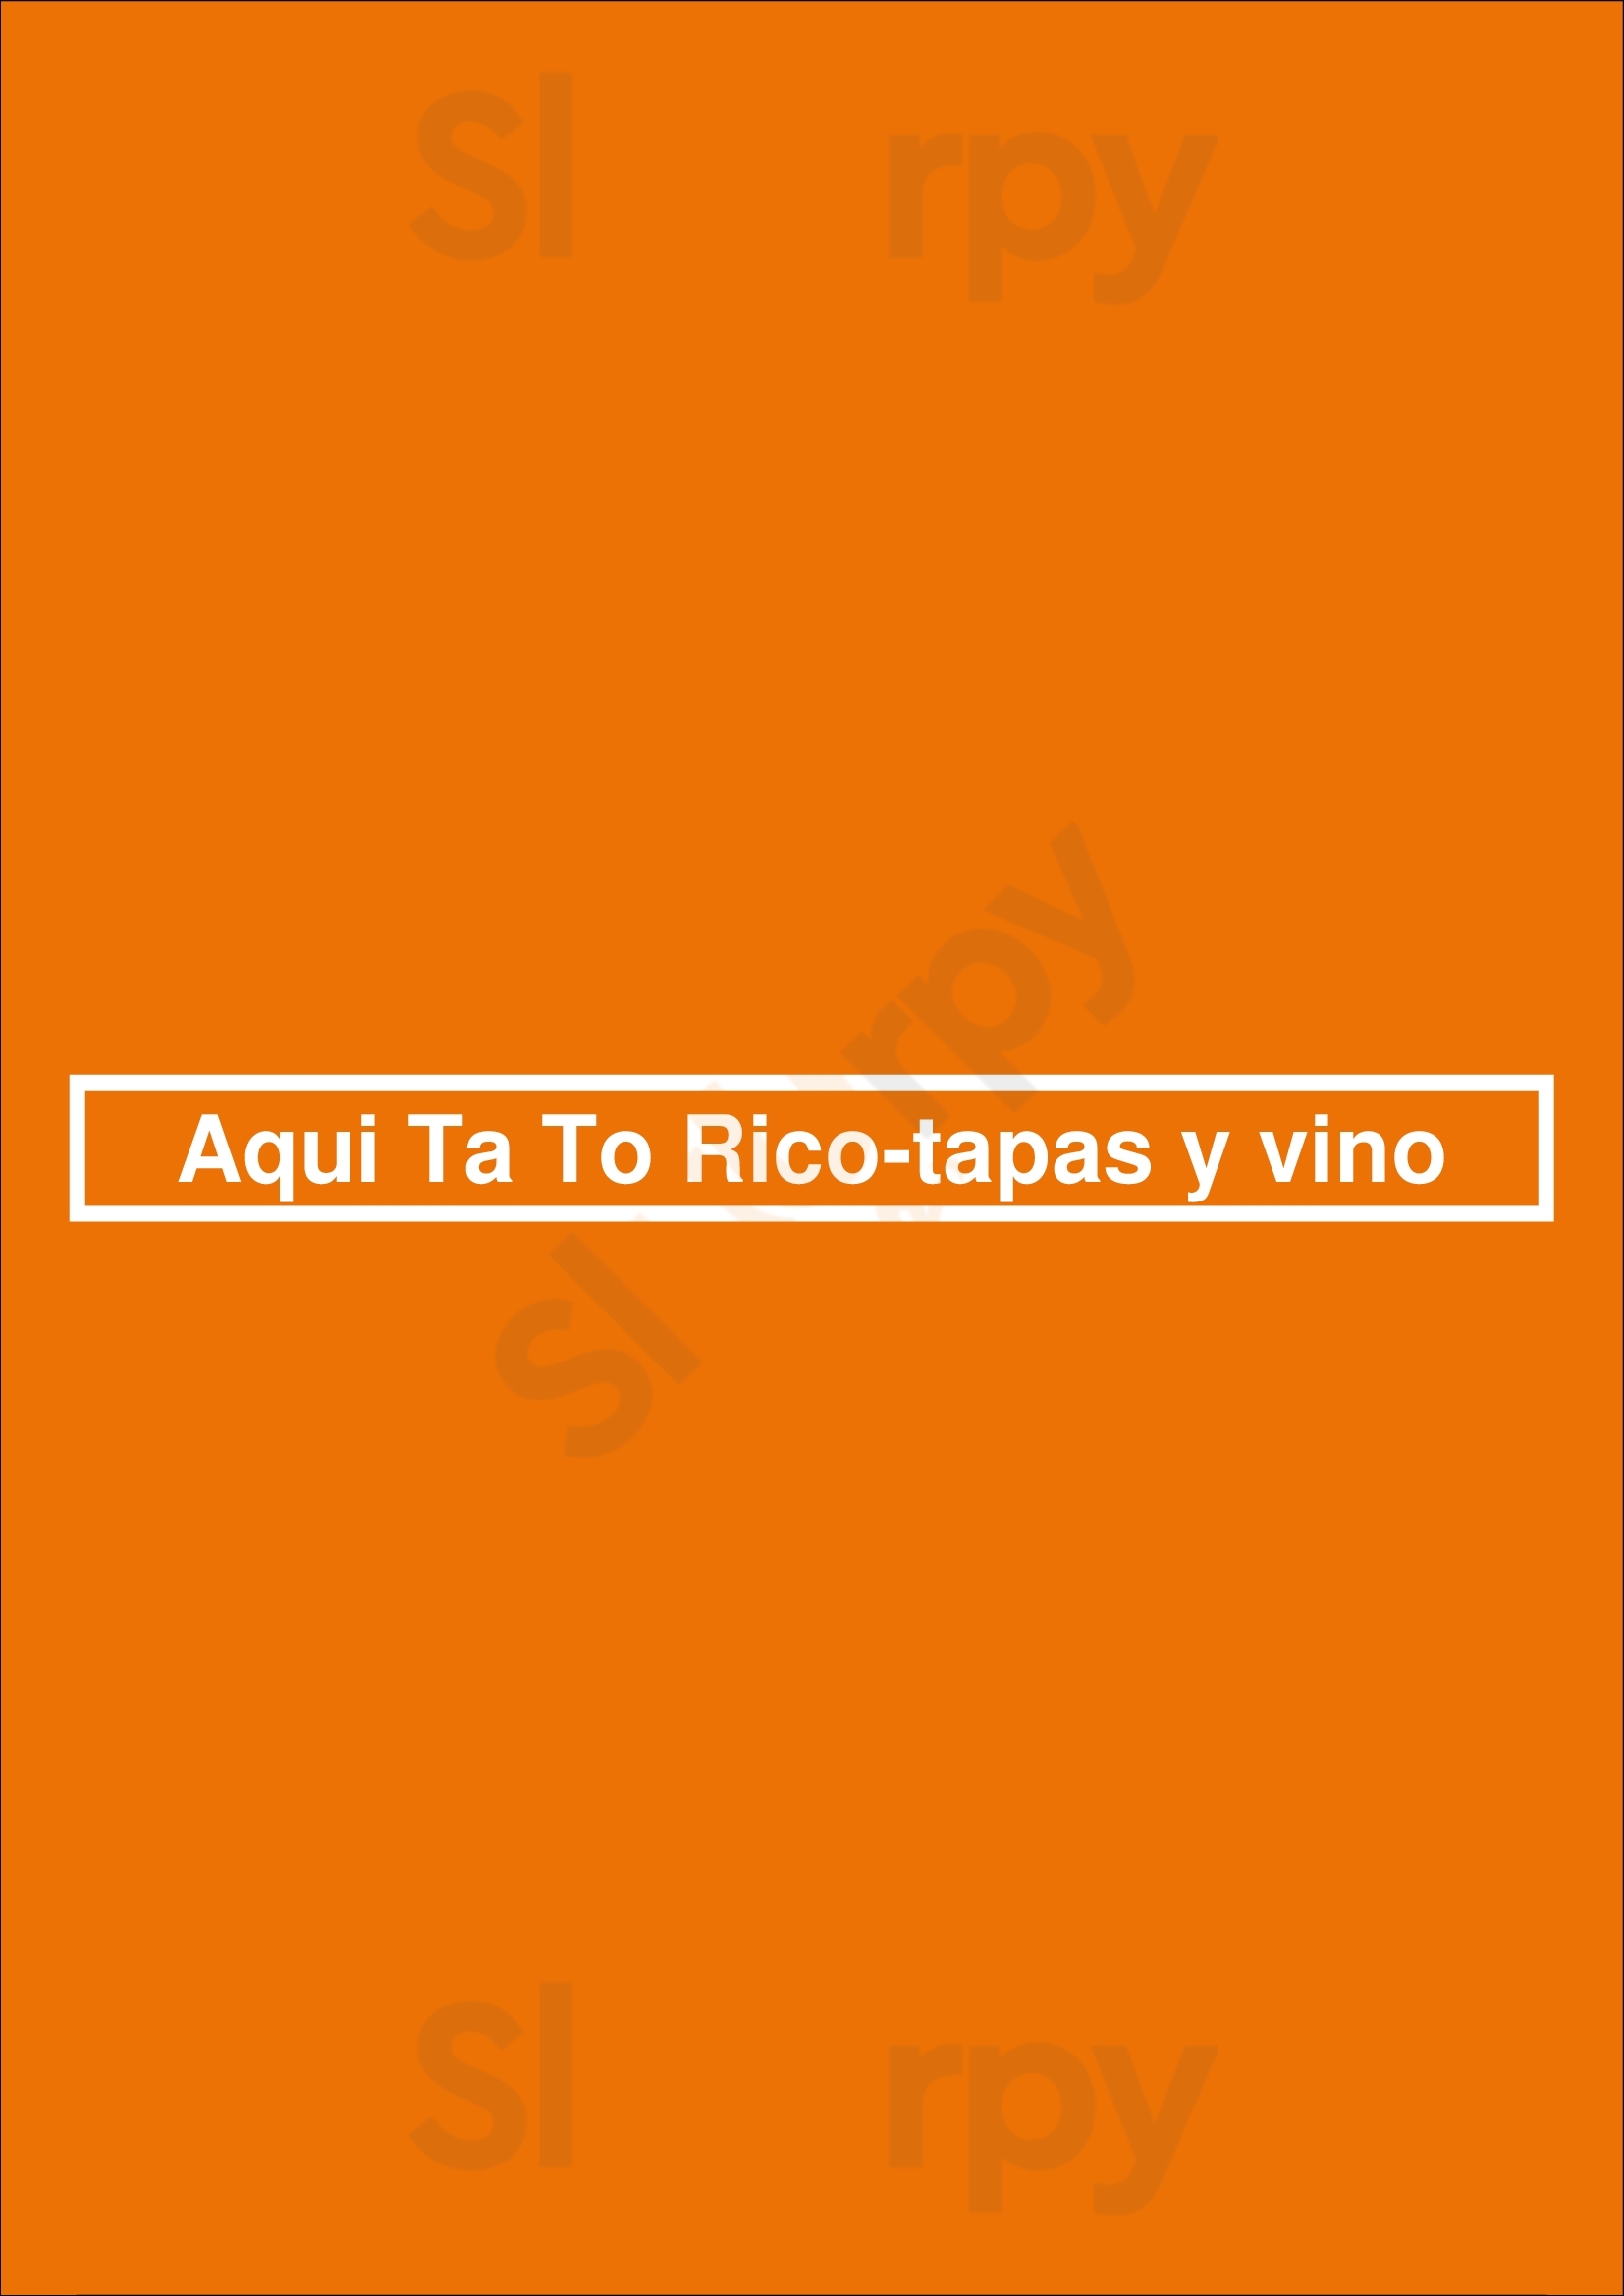 Aqui Ta To Rico-tapas Y Vino Valkenswaard Menu - 1